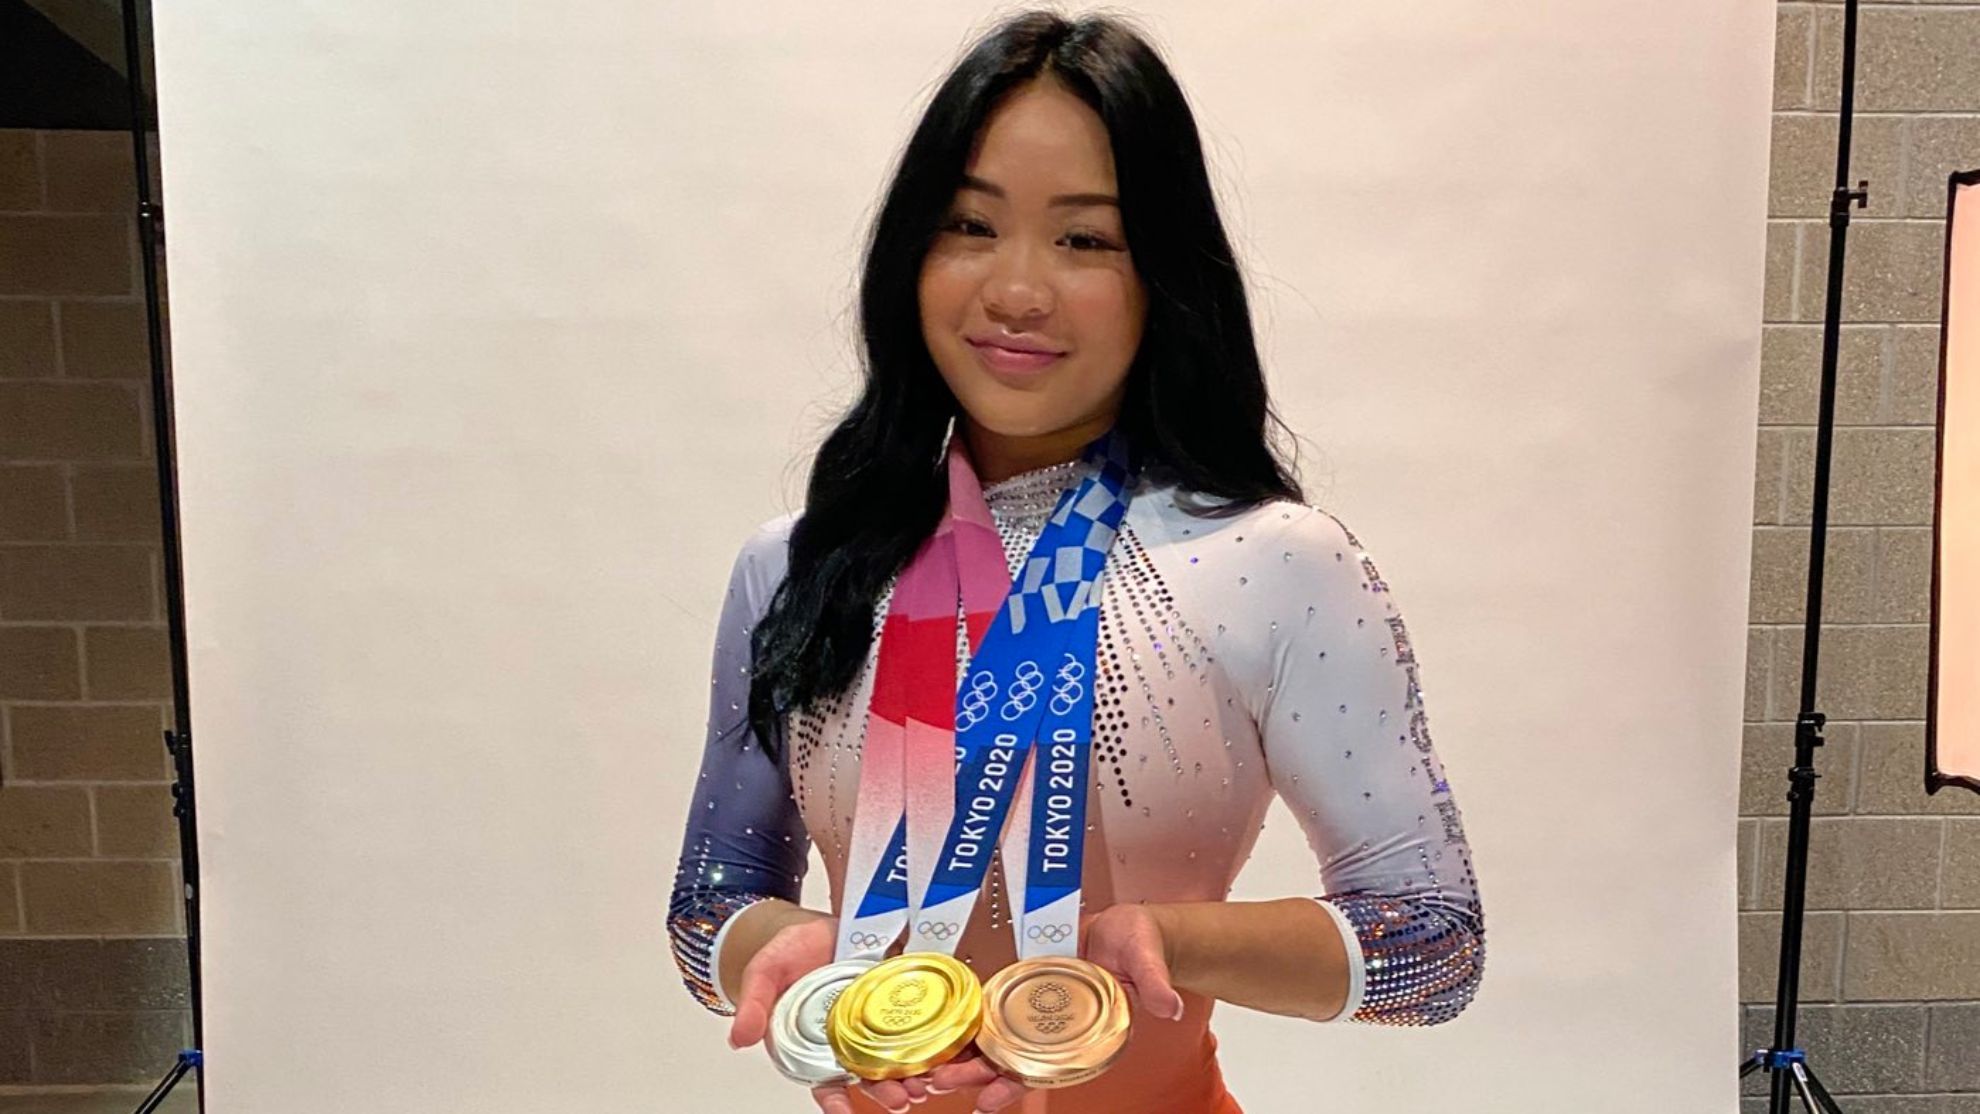 Gymnast Suni Lee details harrowing battle with kidney disease